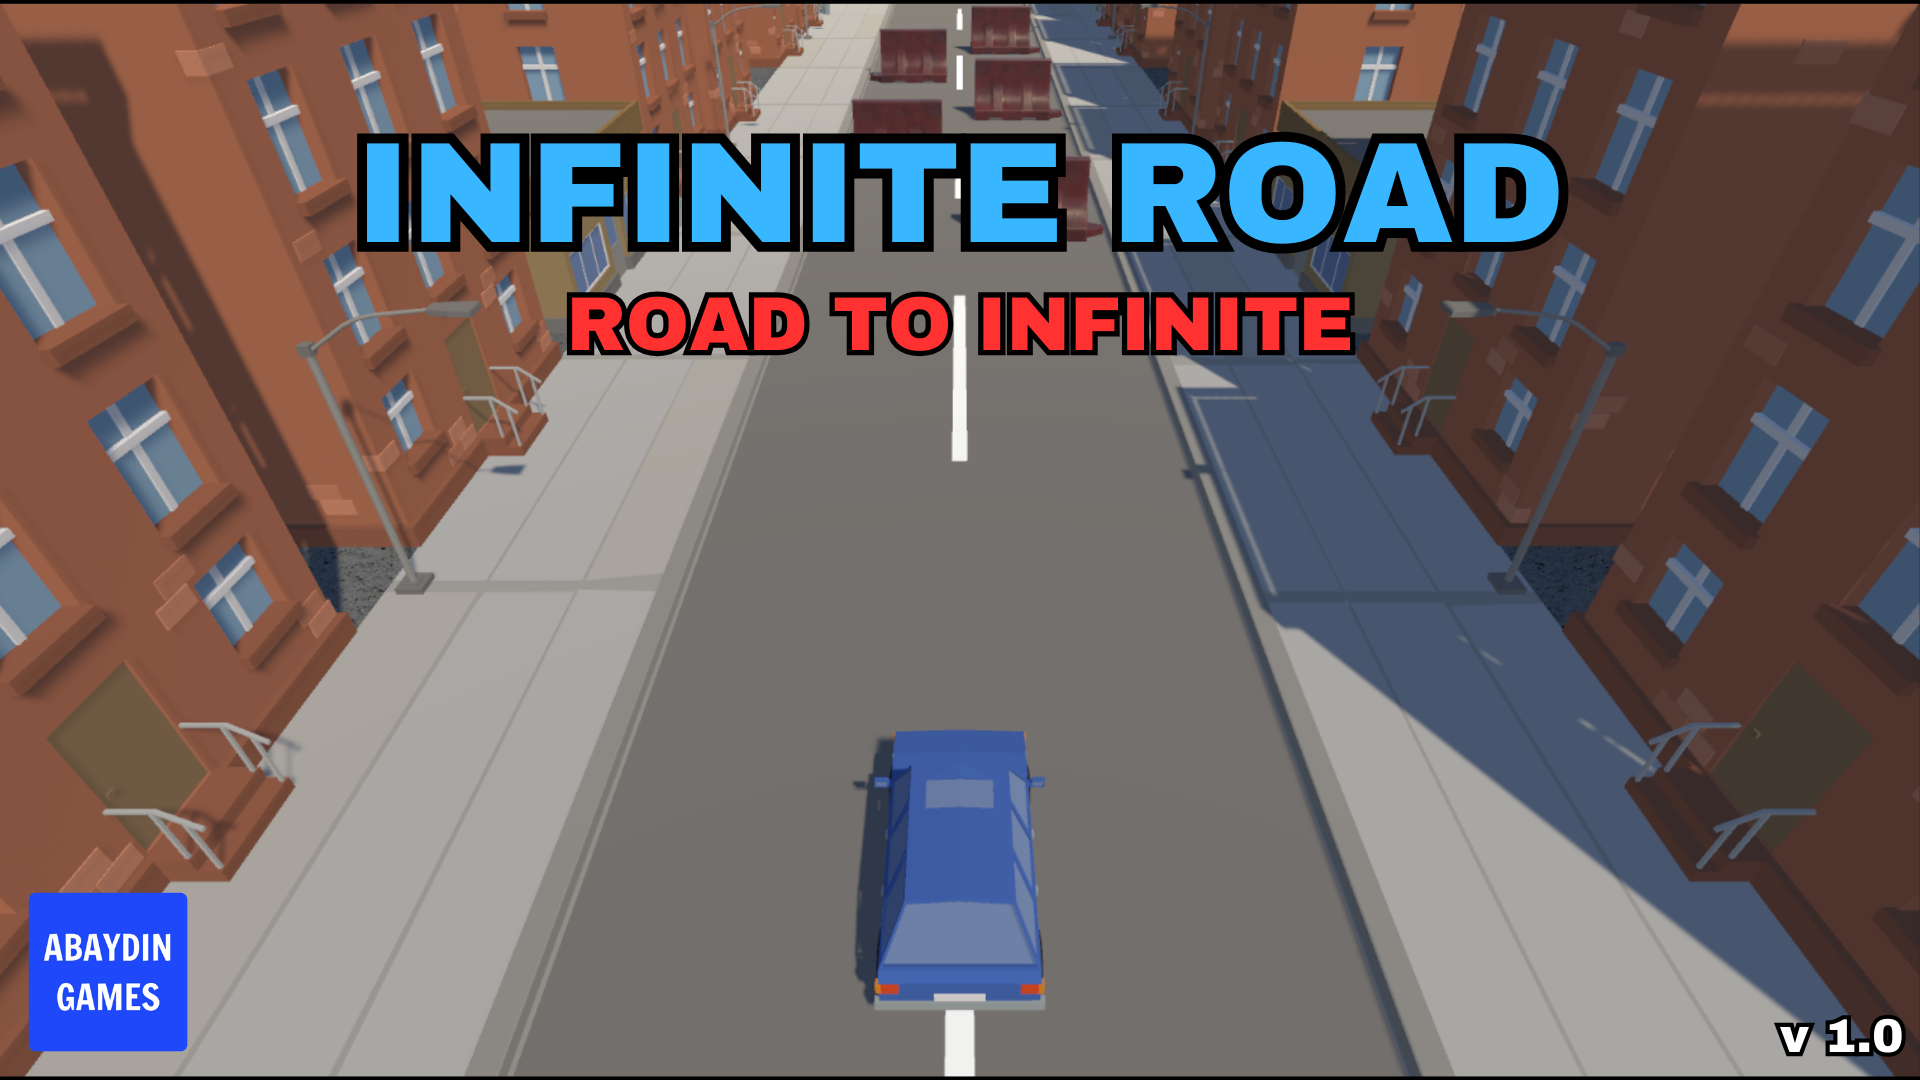 Infinite Road by Abaydın Games